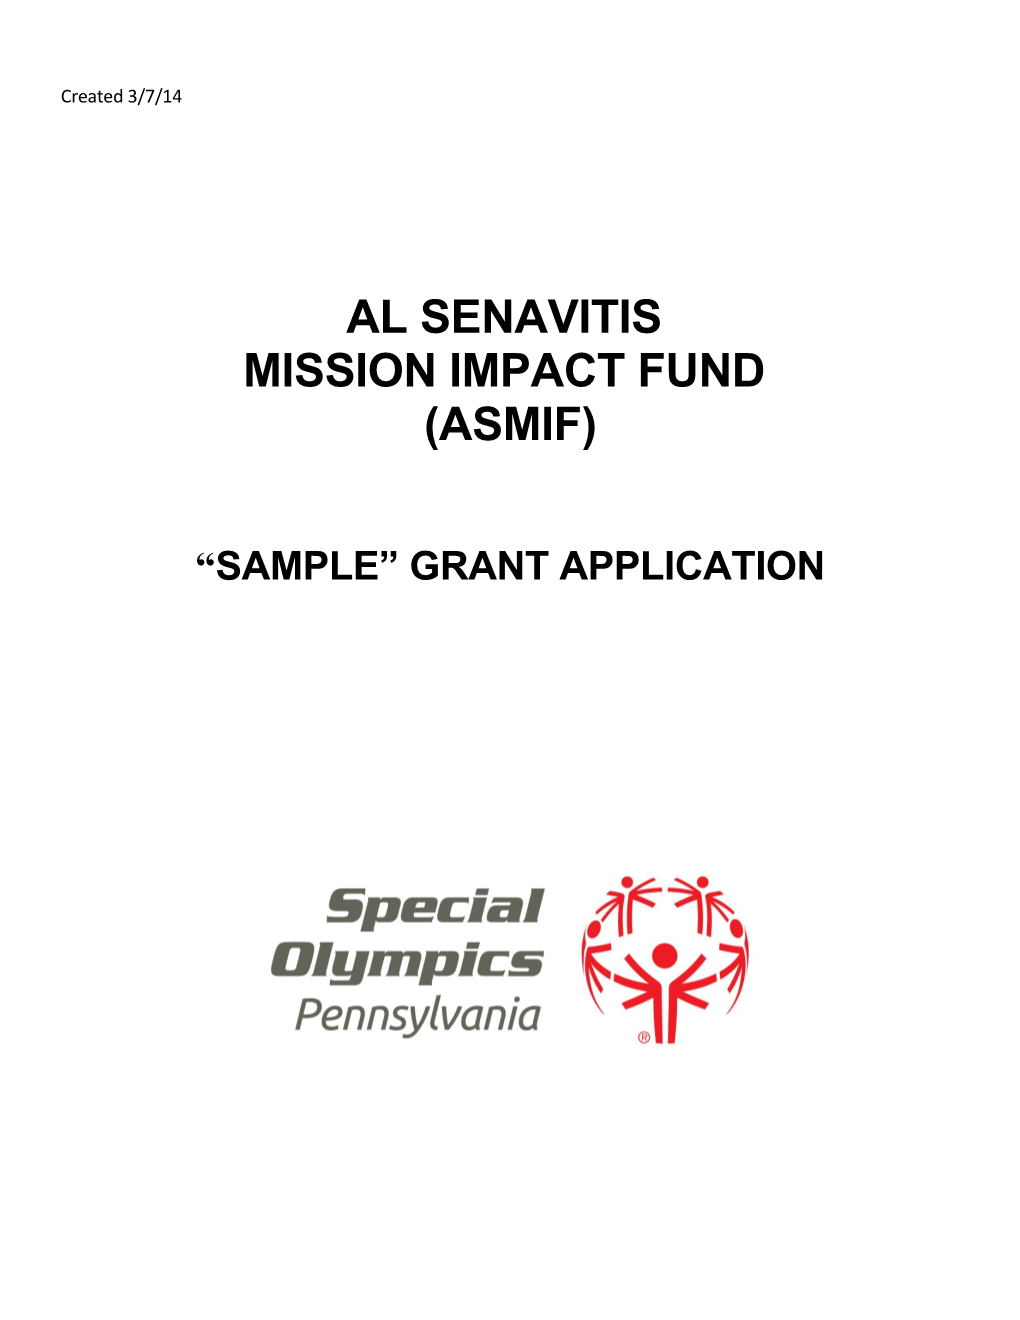 Mission Impact Fund